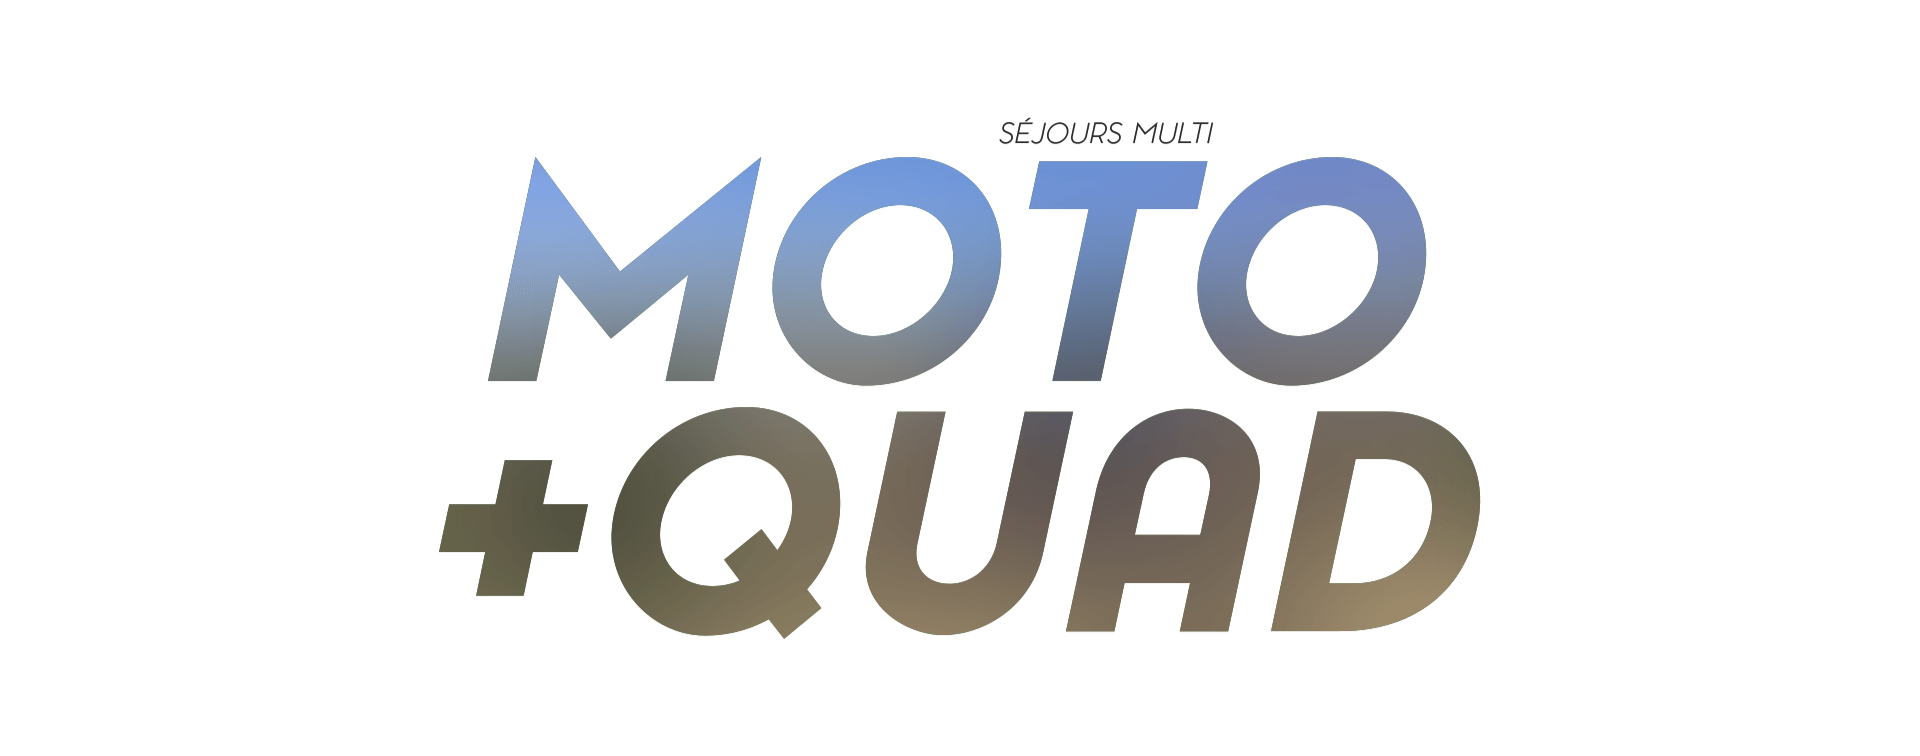 Colonie de vacances Multi Moto Cross / Quad